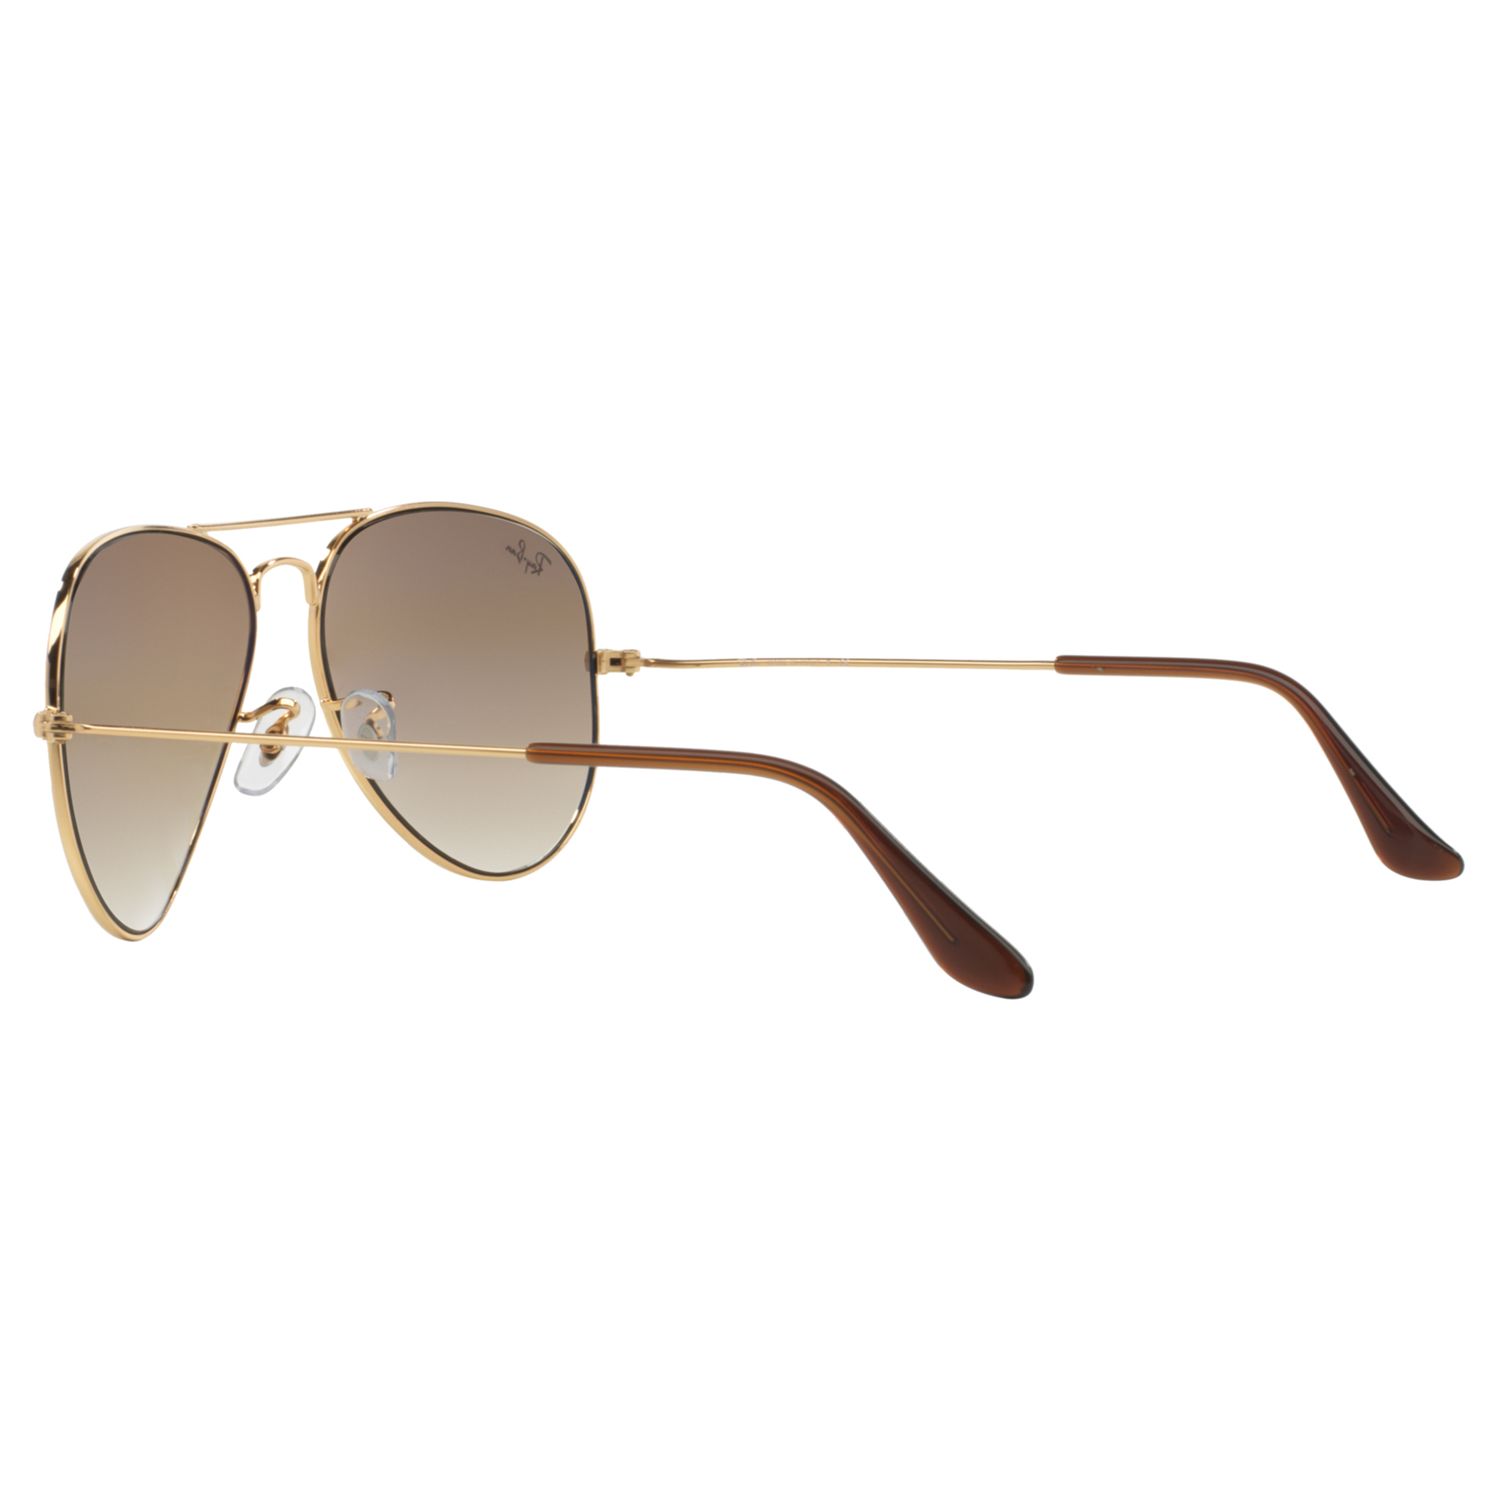 Ray-Ban RB3025 Aviator Sunglasses, Gold/Light Brown Gradient